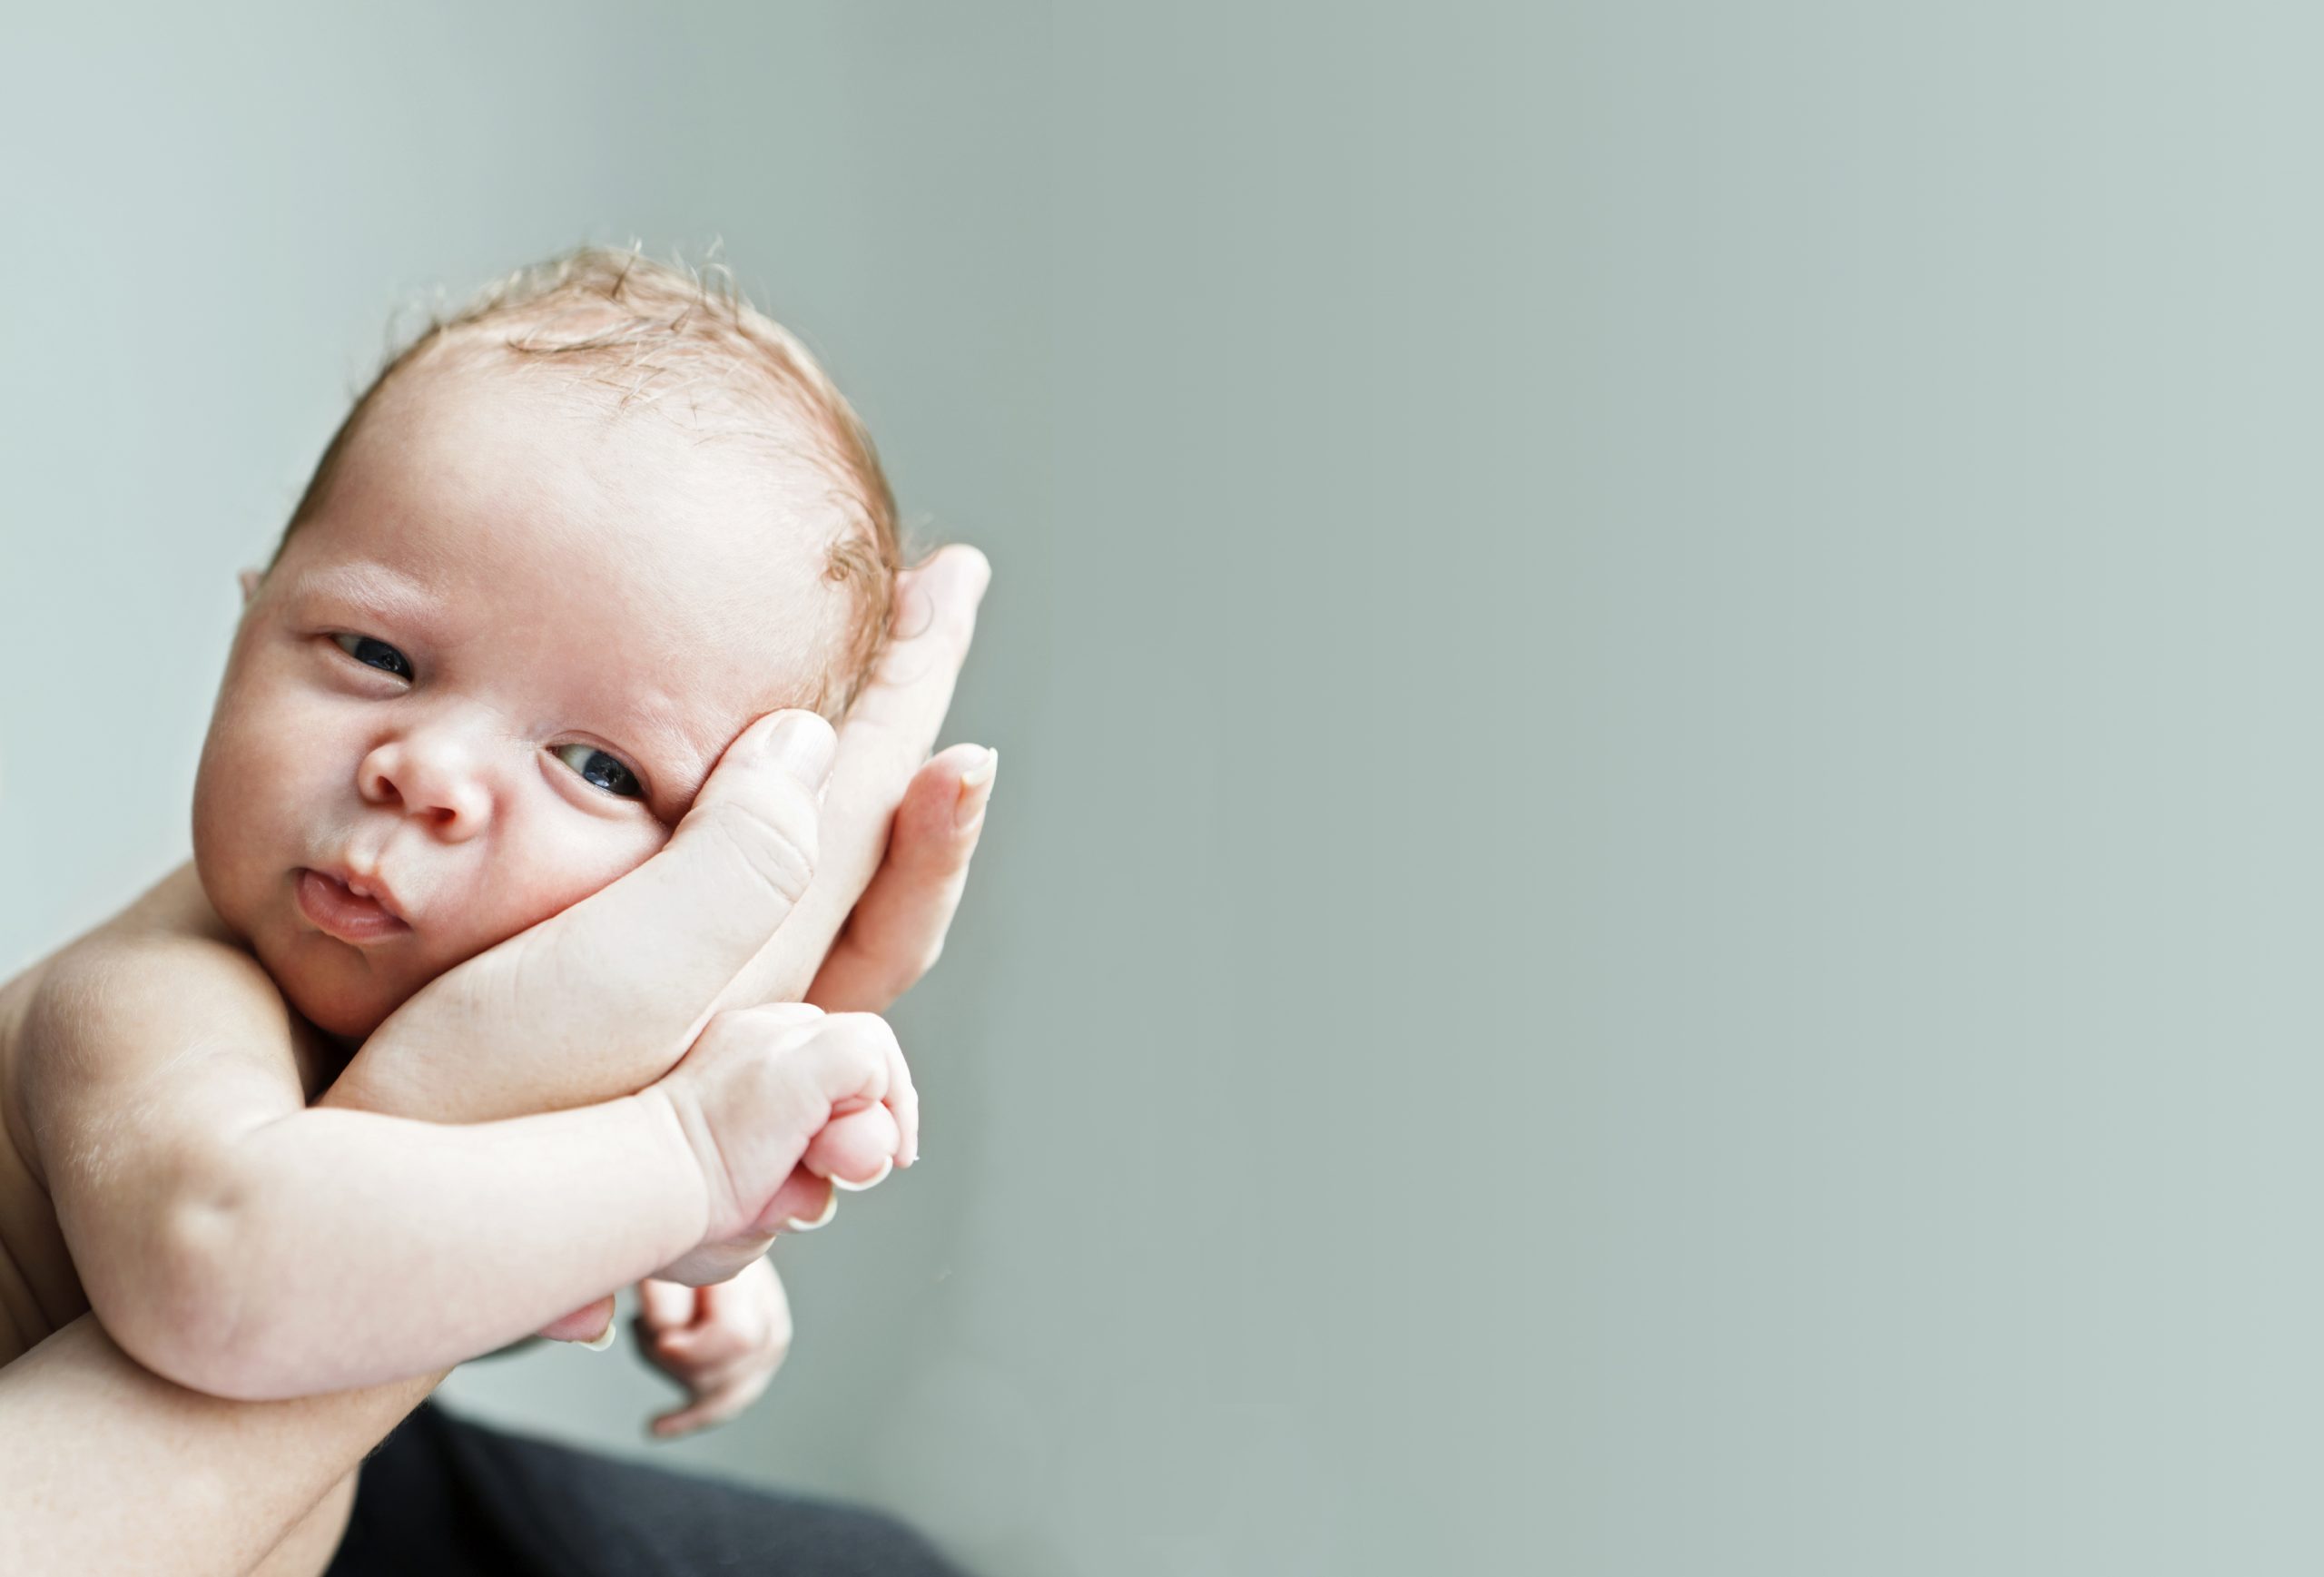 A baby held in adult hands.